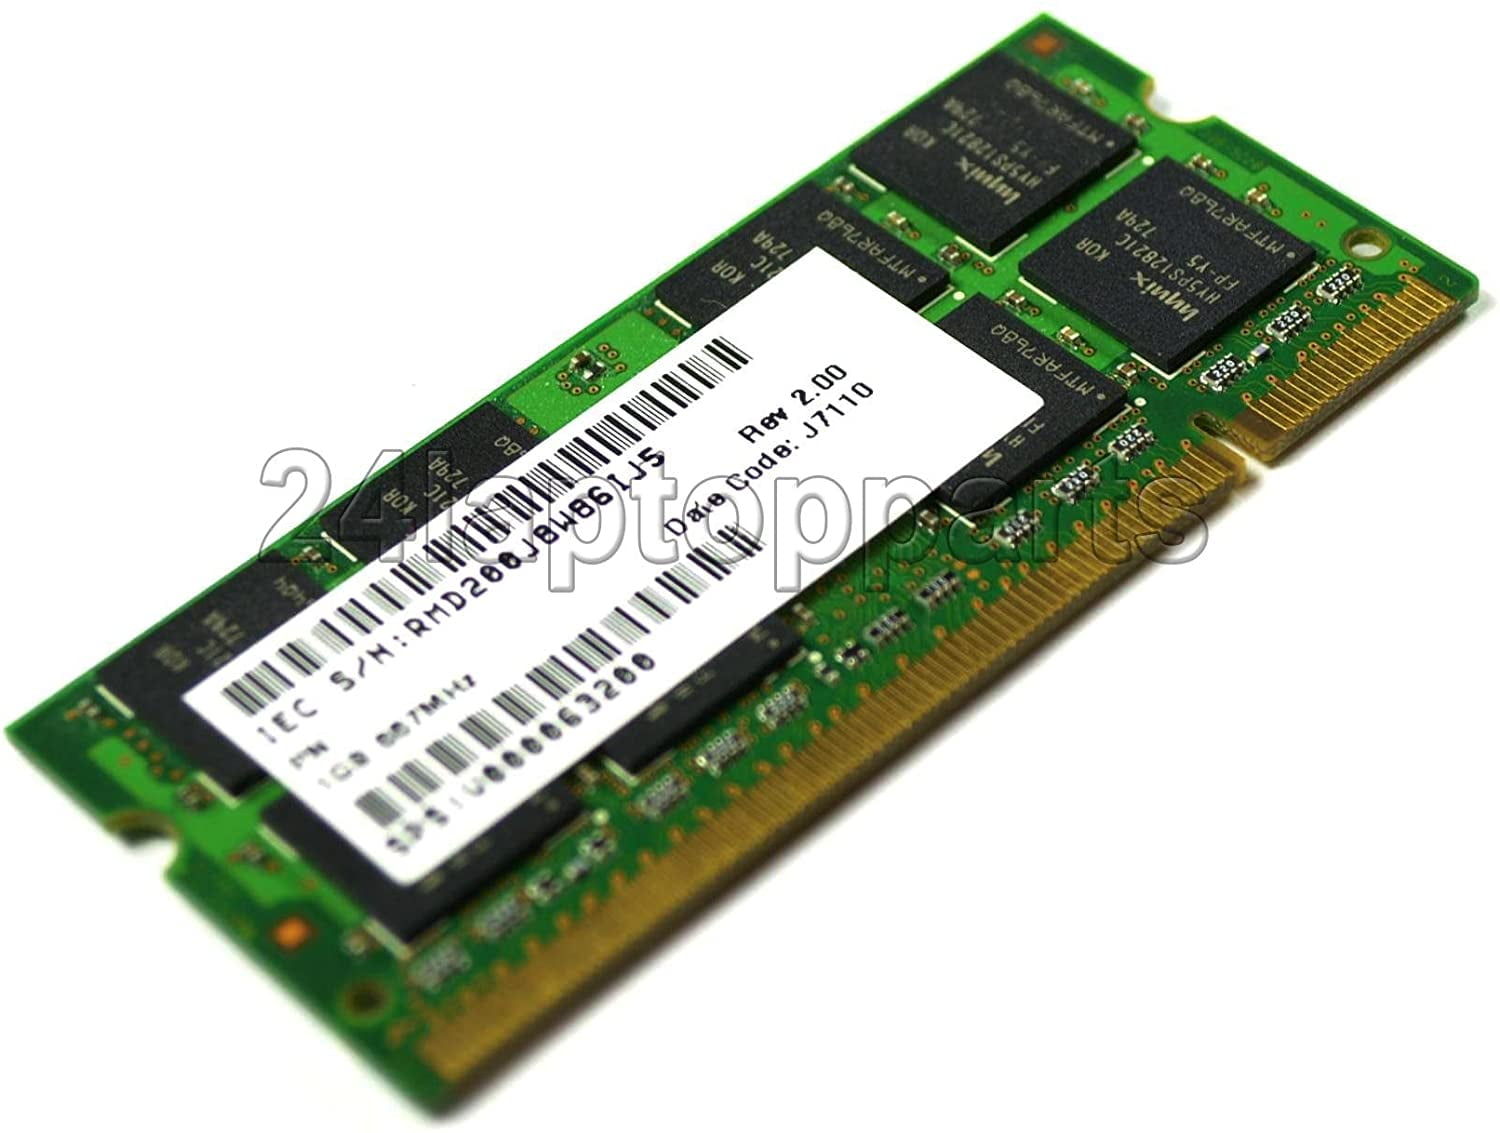 RAM Memory Upgrade for The Acer Aspire 5532-5509 Genuine A-Tech Brand 2GB DDR2-667 PC2-5300 